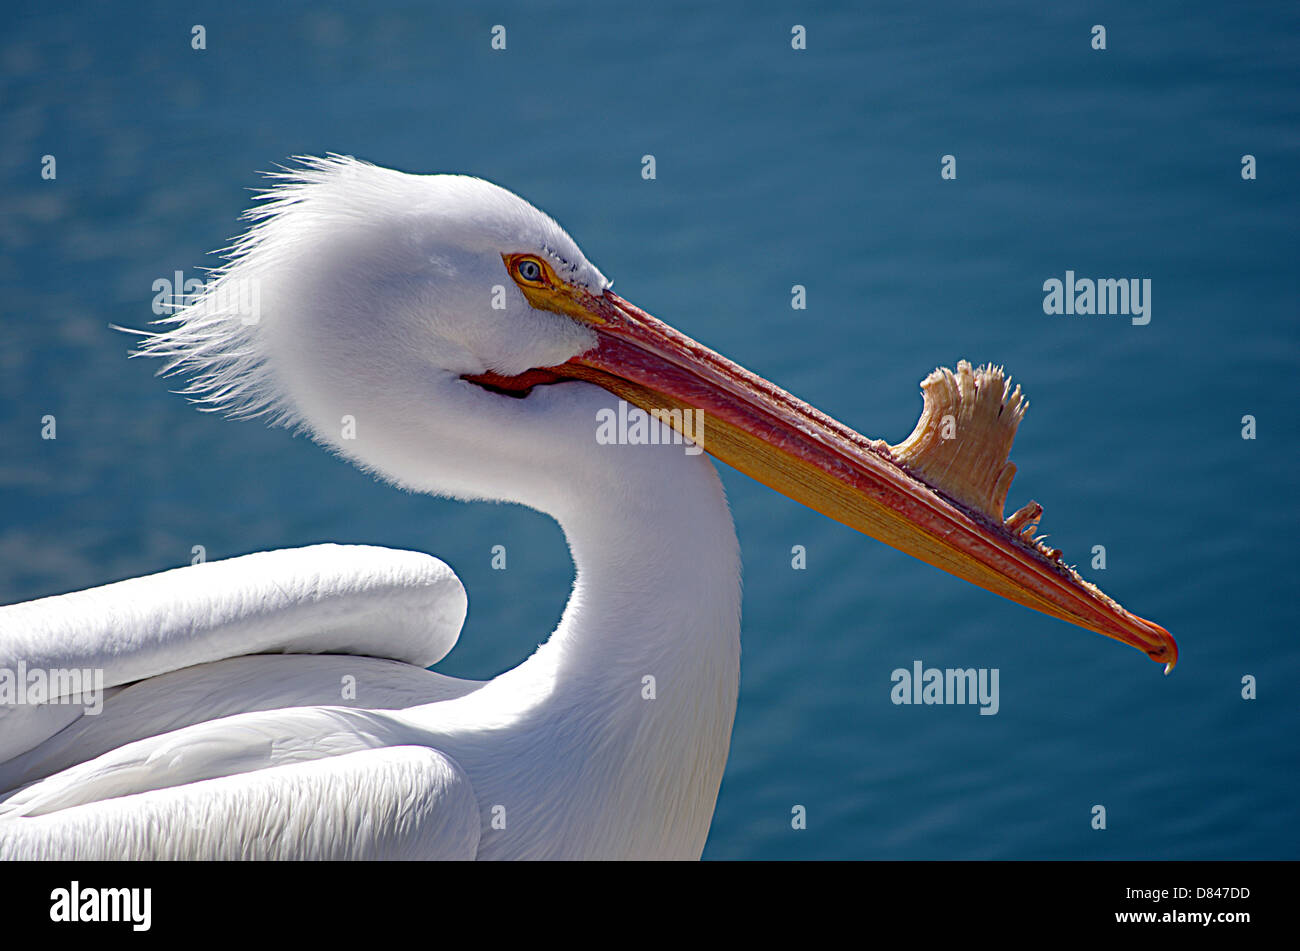 Pelican beside a blue ocean Stock Photo